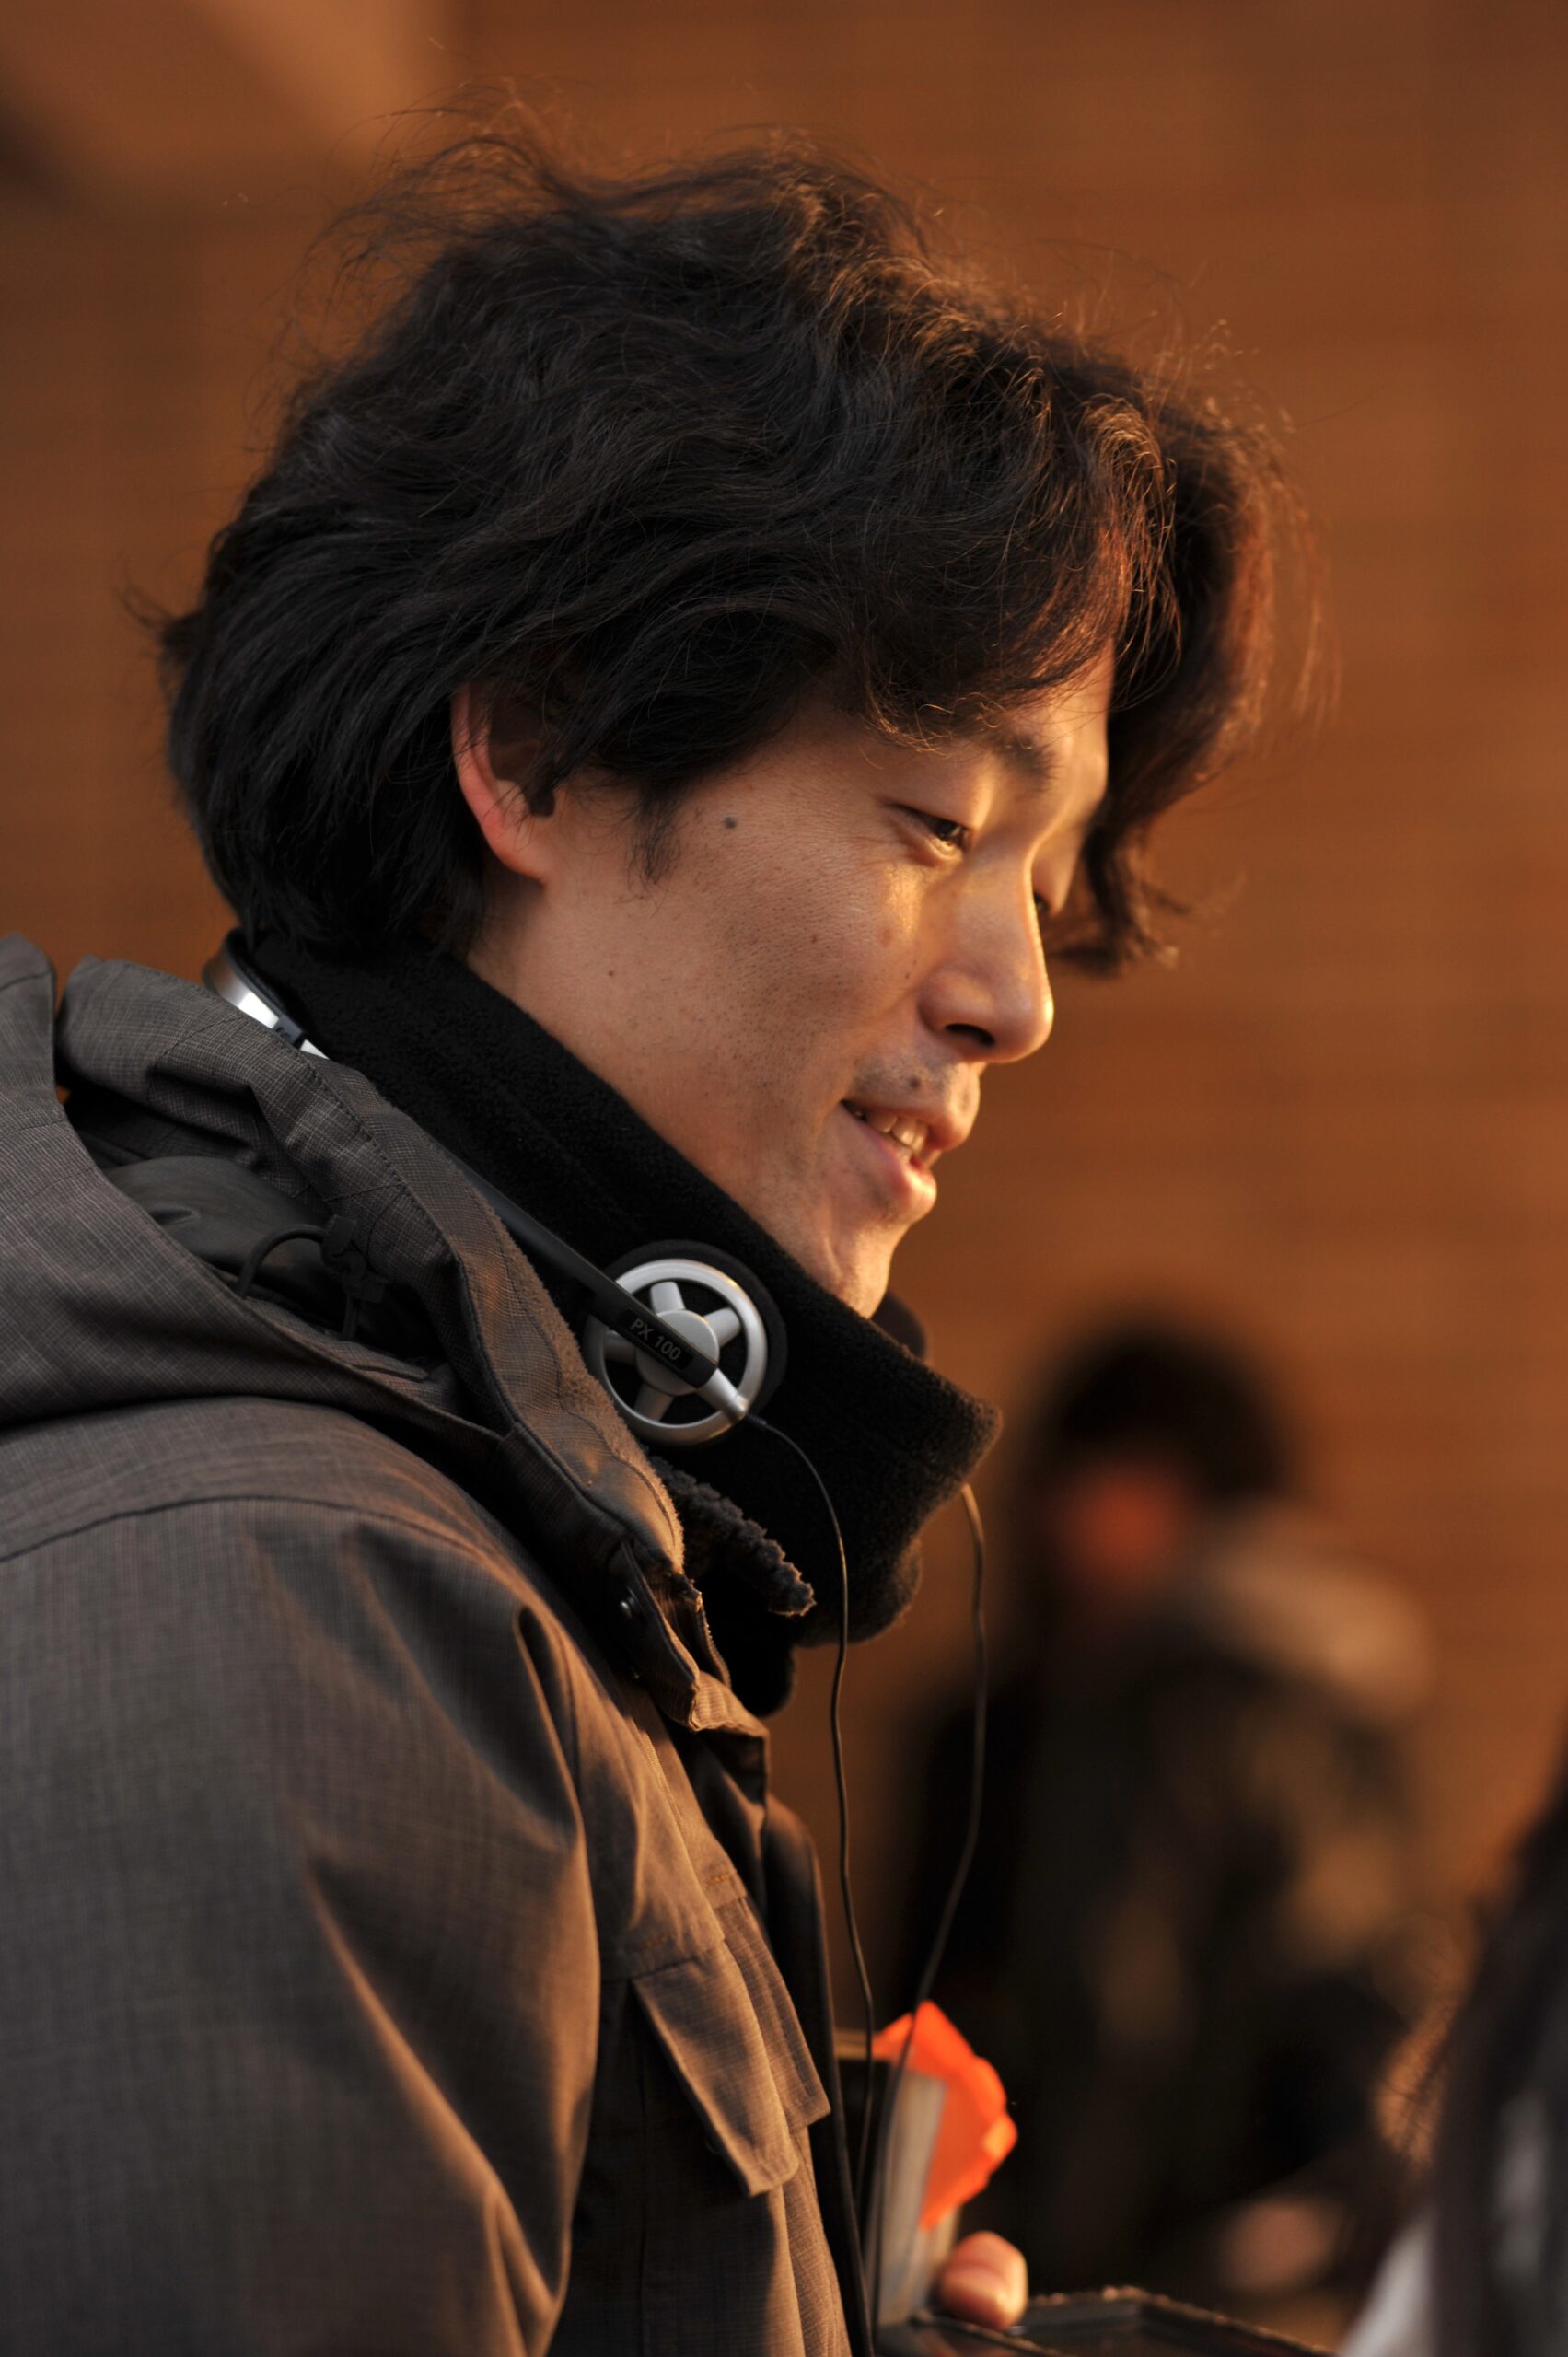 my hero academia live action director shinsuke sato